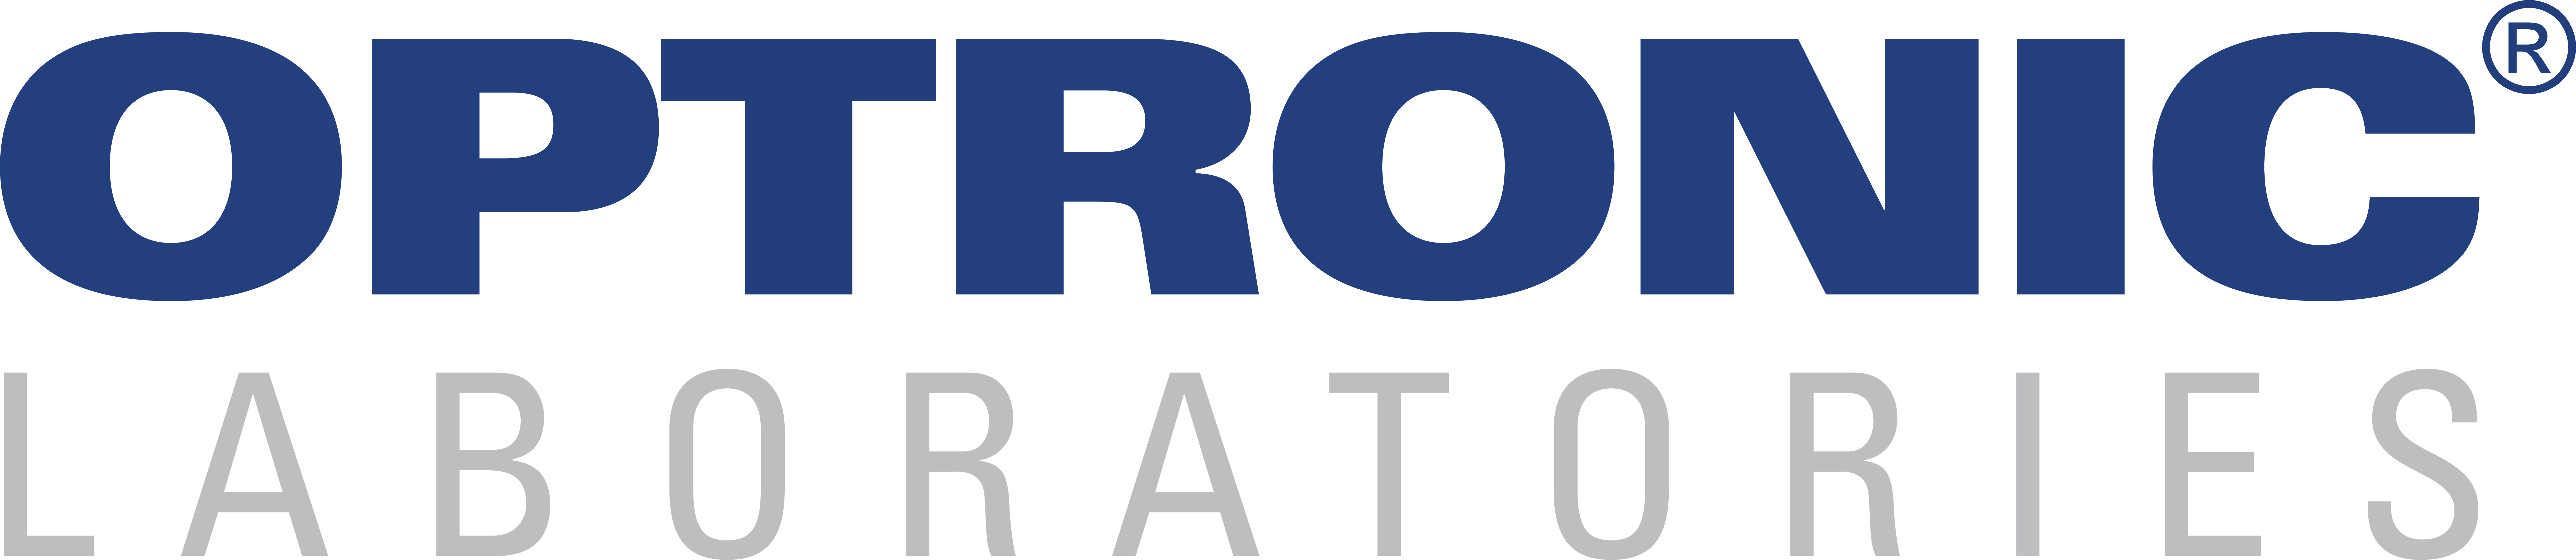 Optronic Laboratories, LLC Logo